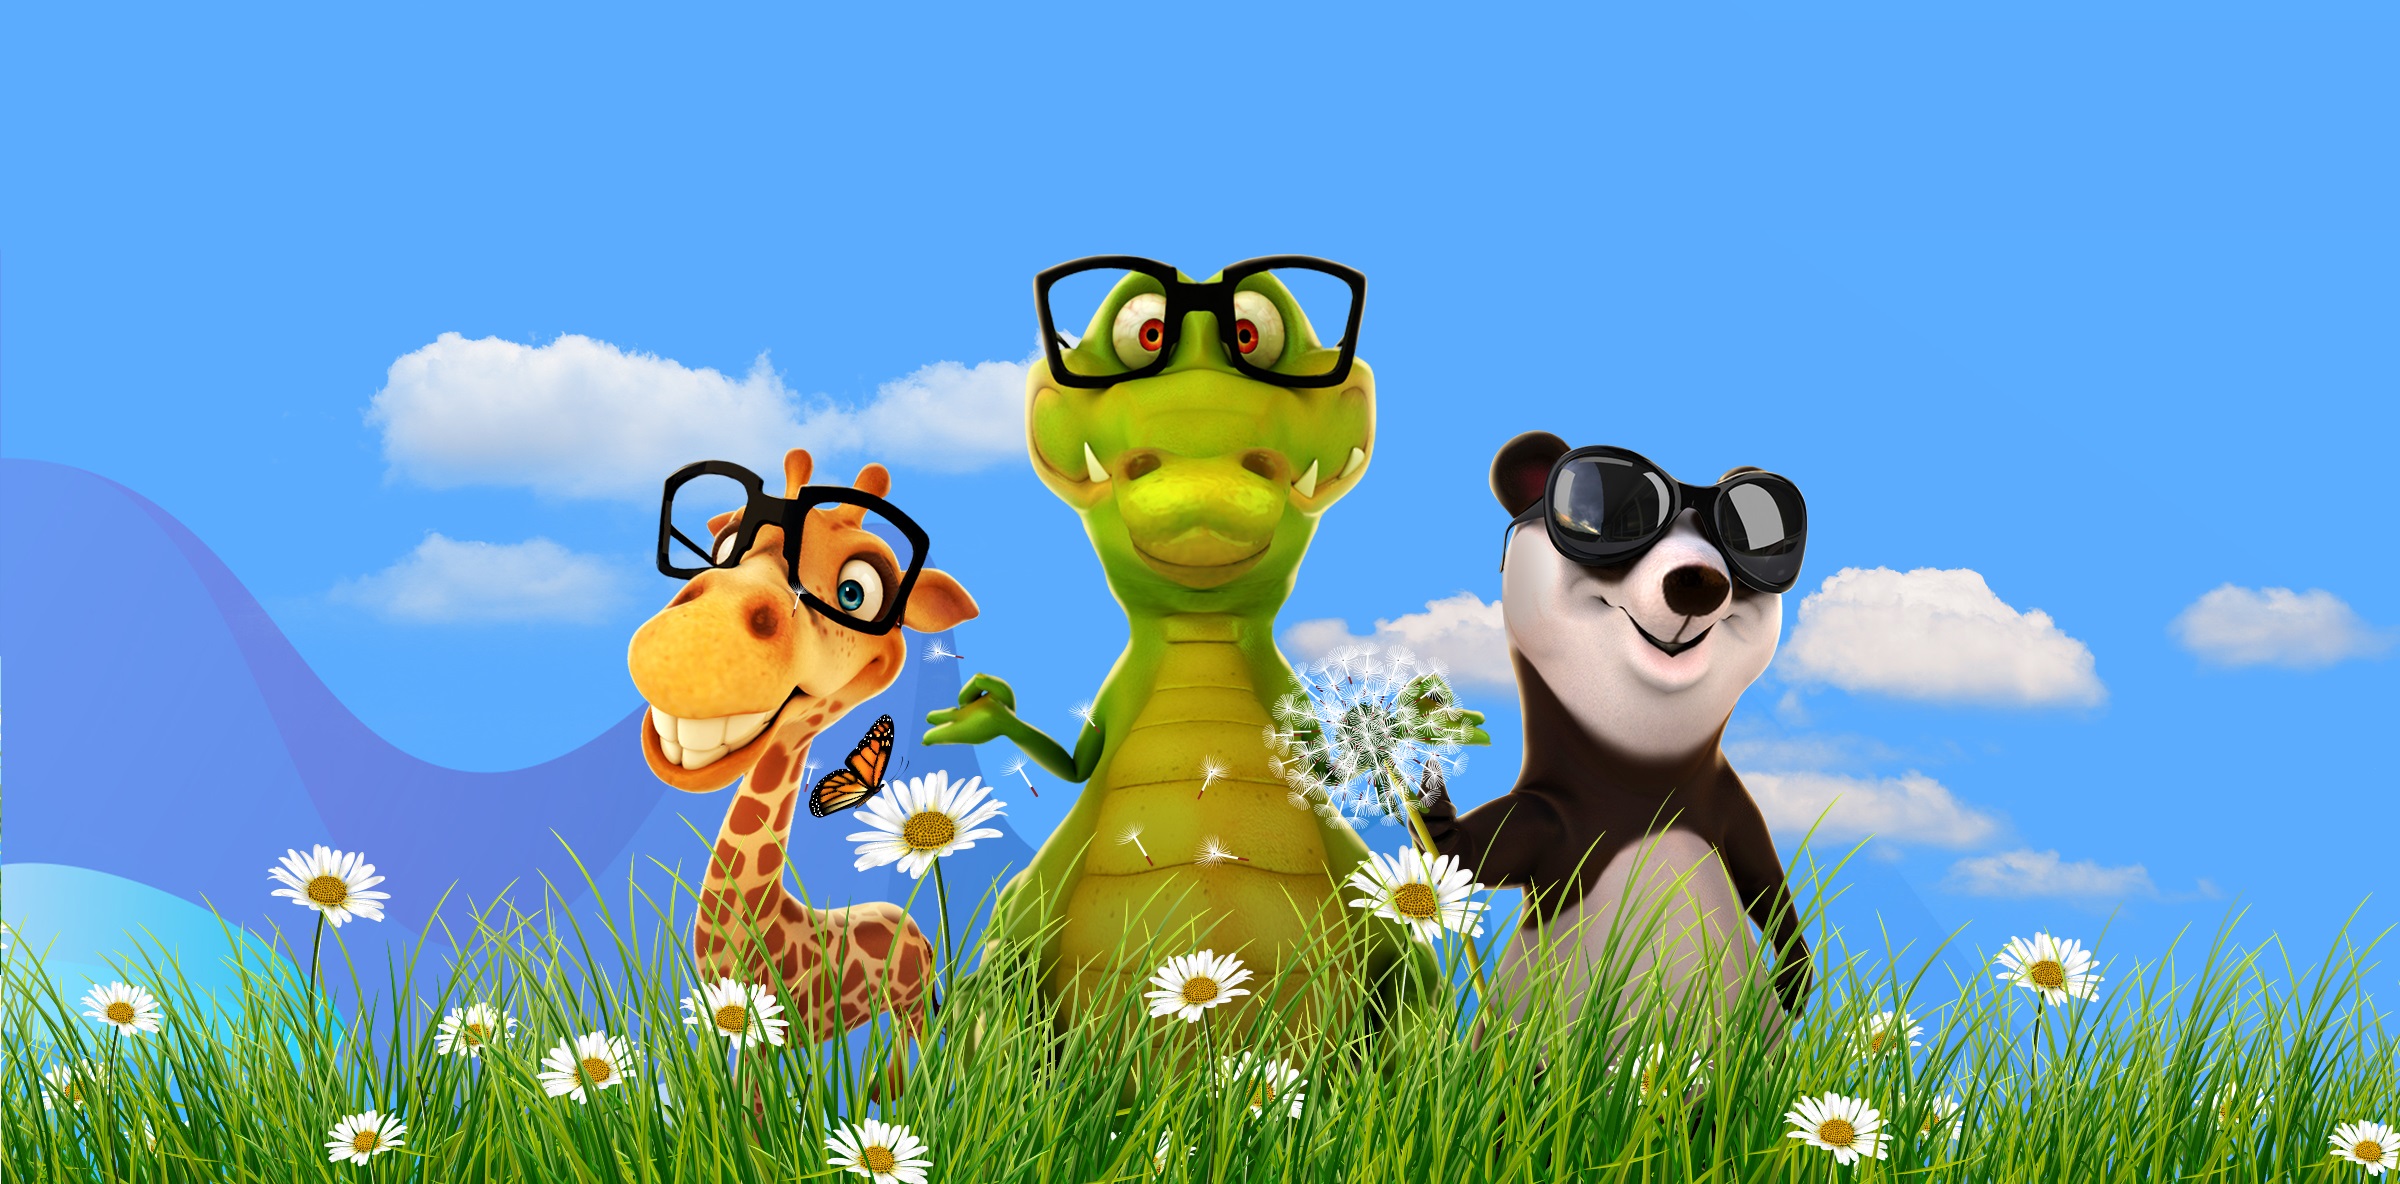 Panda, crocodile and giraffe cartoon animals standing in a field of daisies.